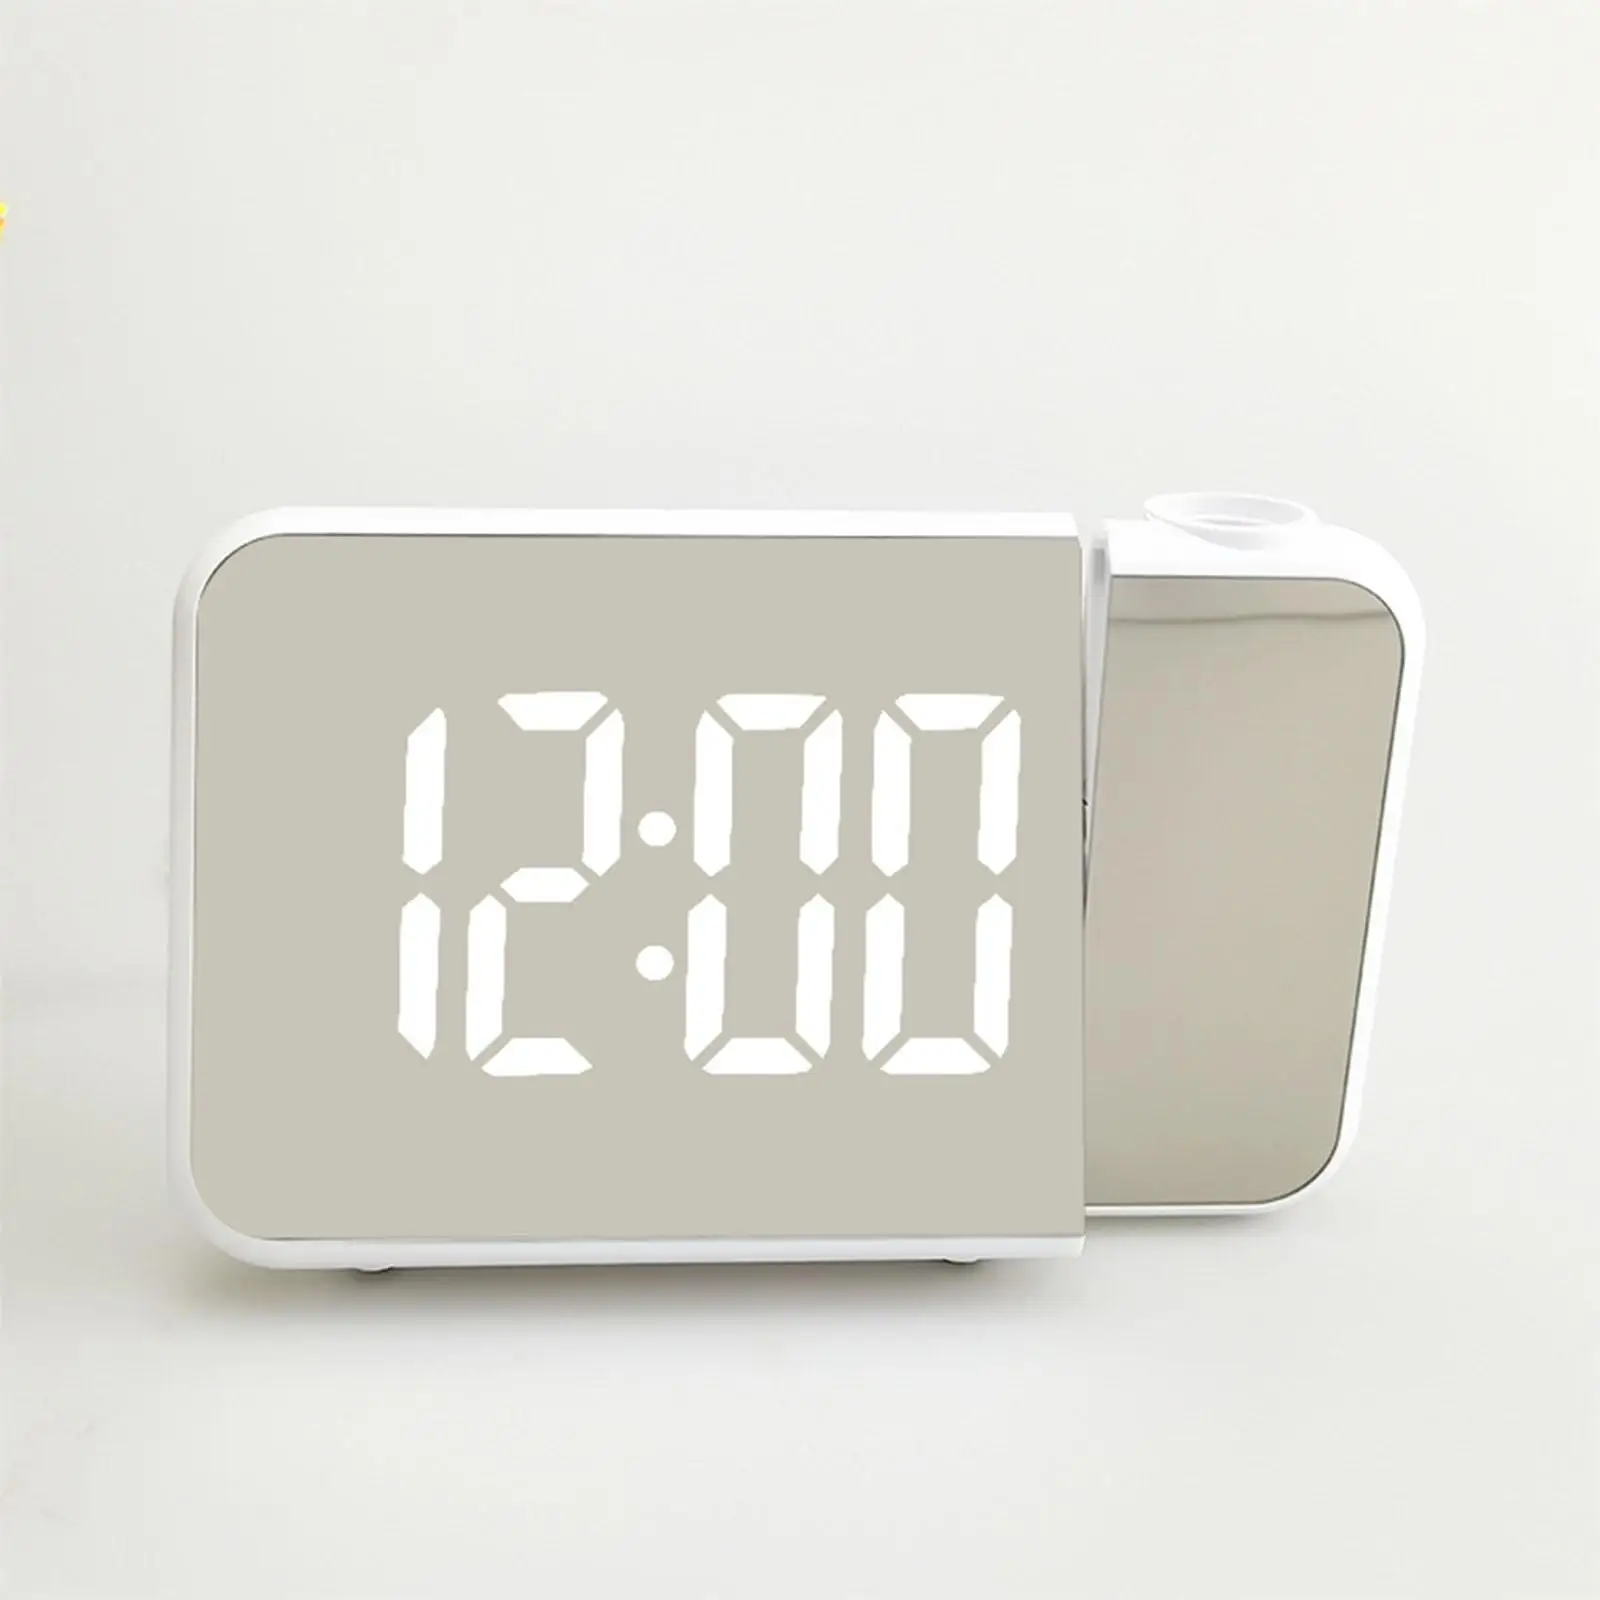 LED Digitl Projection lrm Clock Electronic lrm Clock with Projection Time Projector Bedroom Bedside Clock